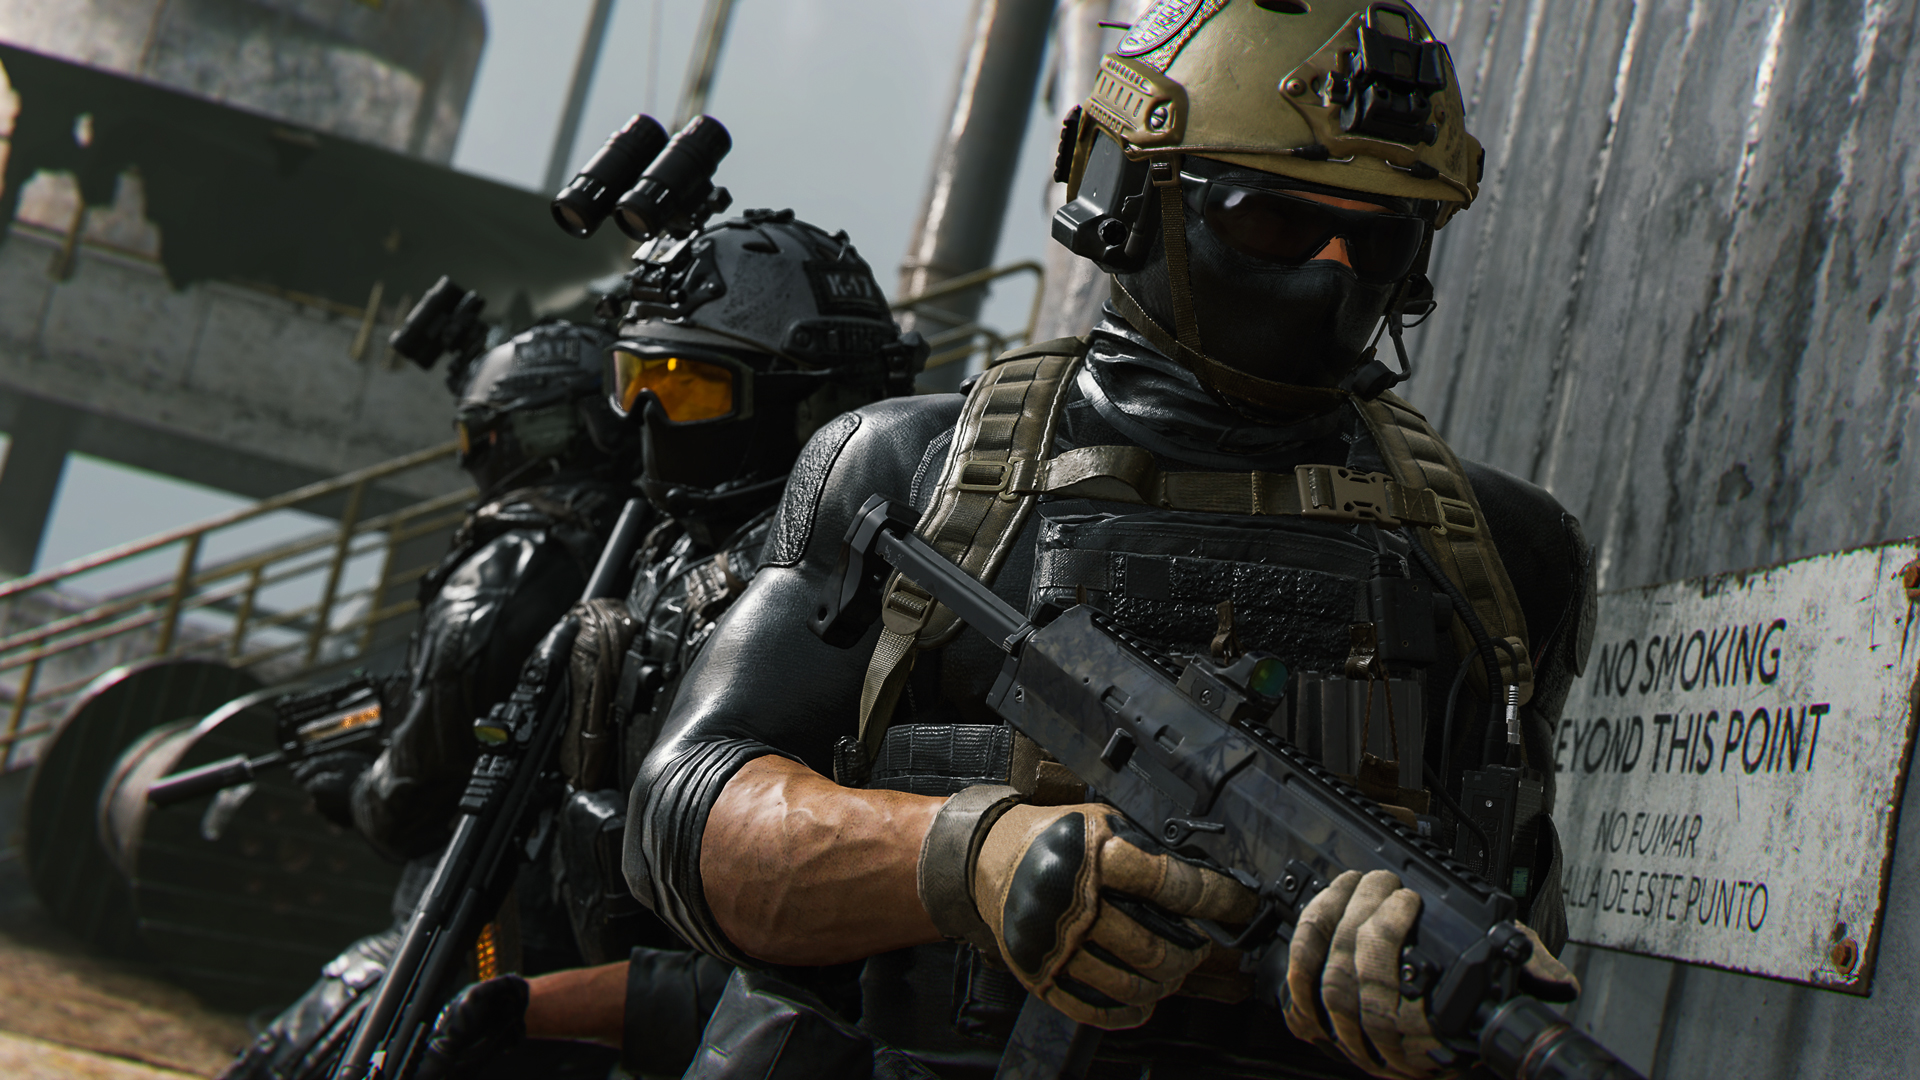 CoD Modern Warfare 2 beta rewards appeared